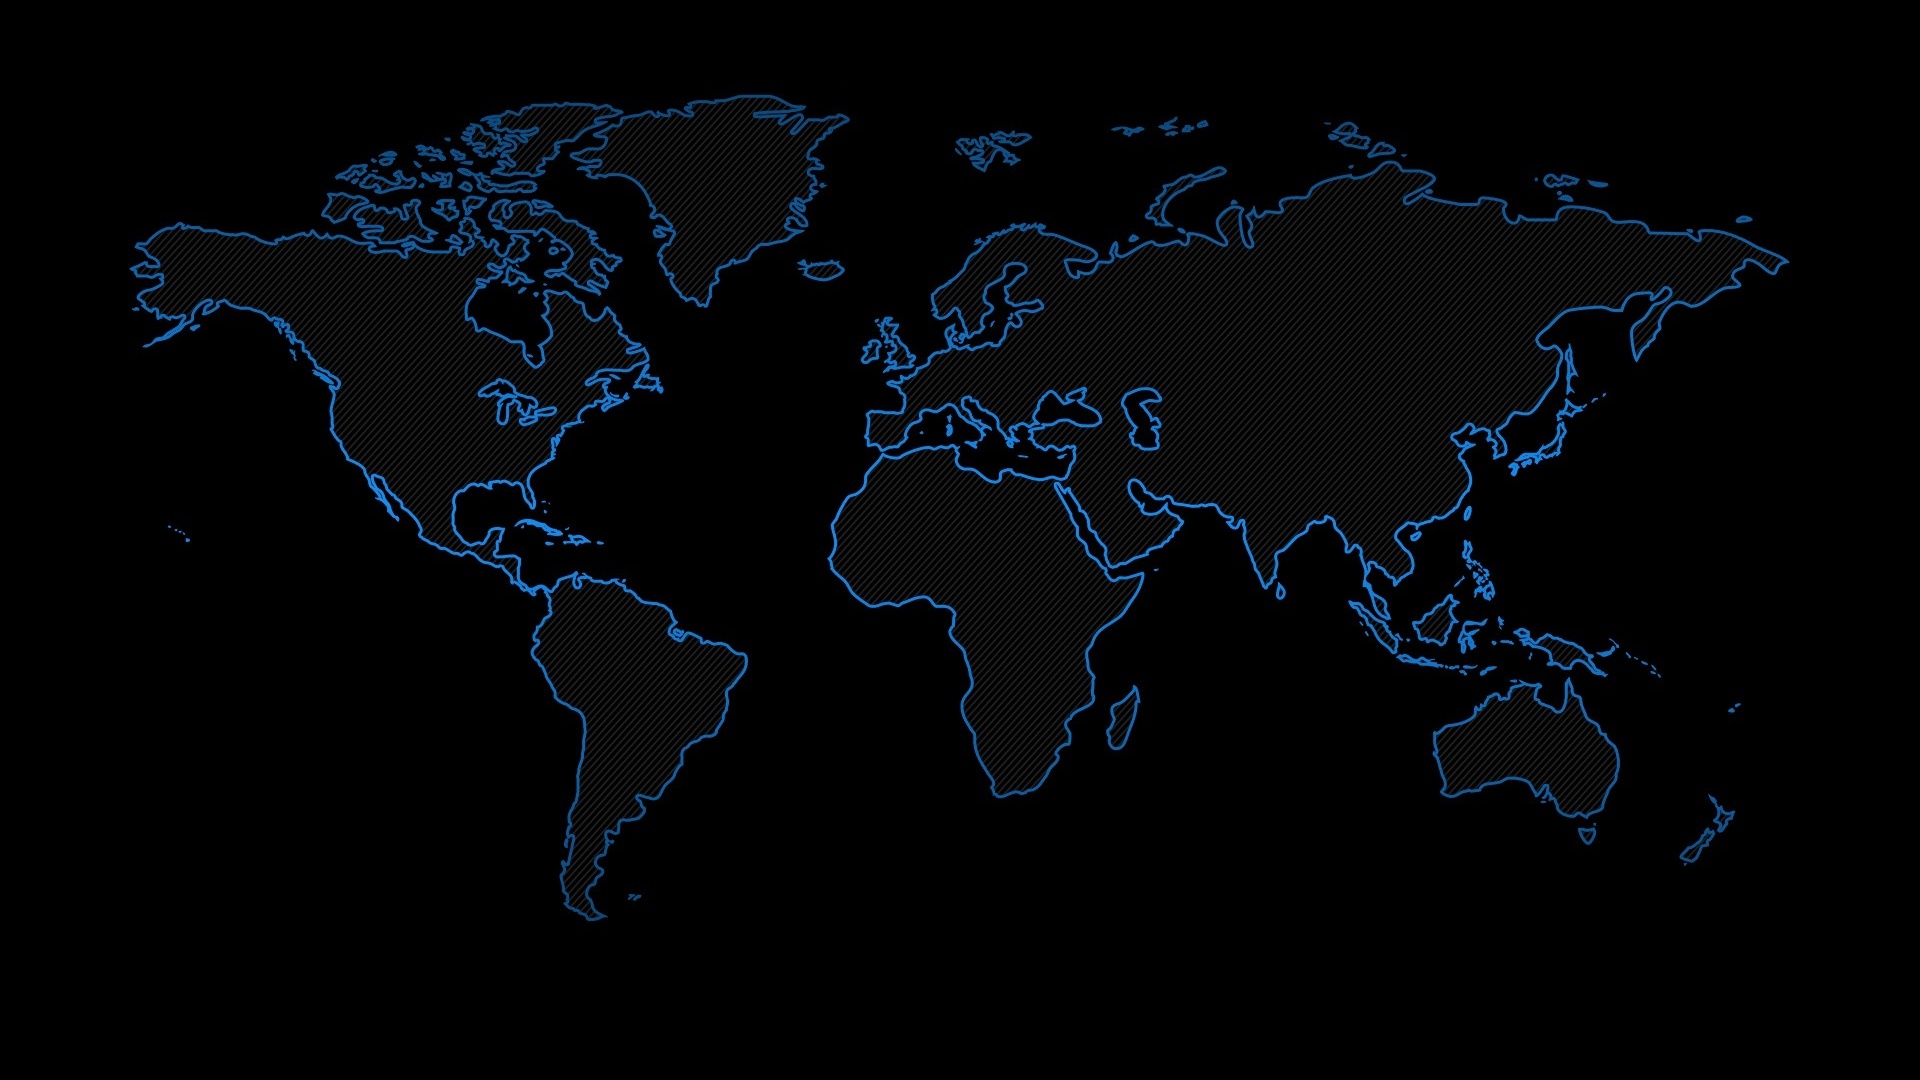 General 1920x1080 simple background black background minimalism digital art map world map continents stripes blue